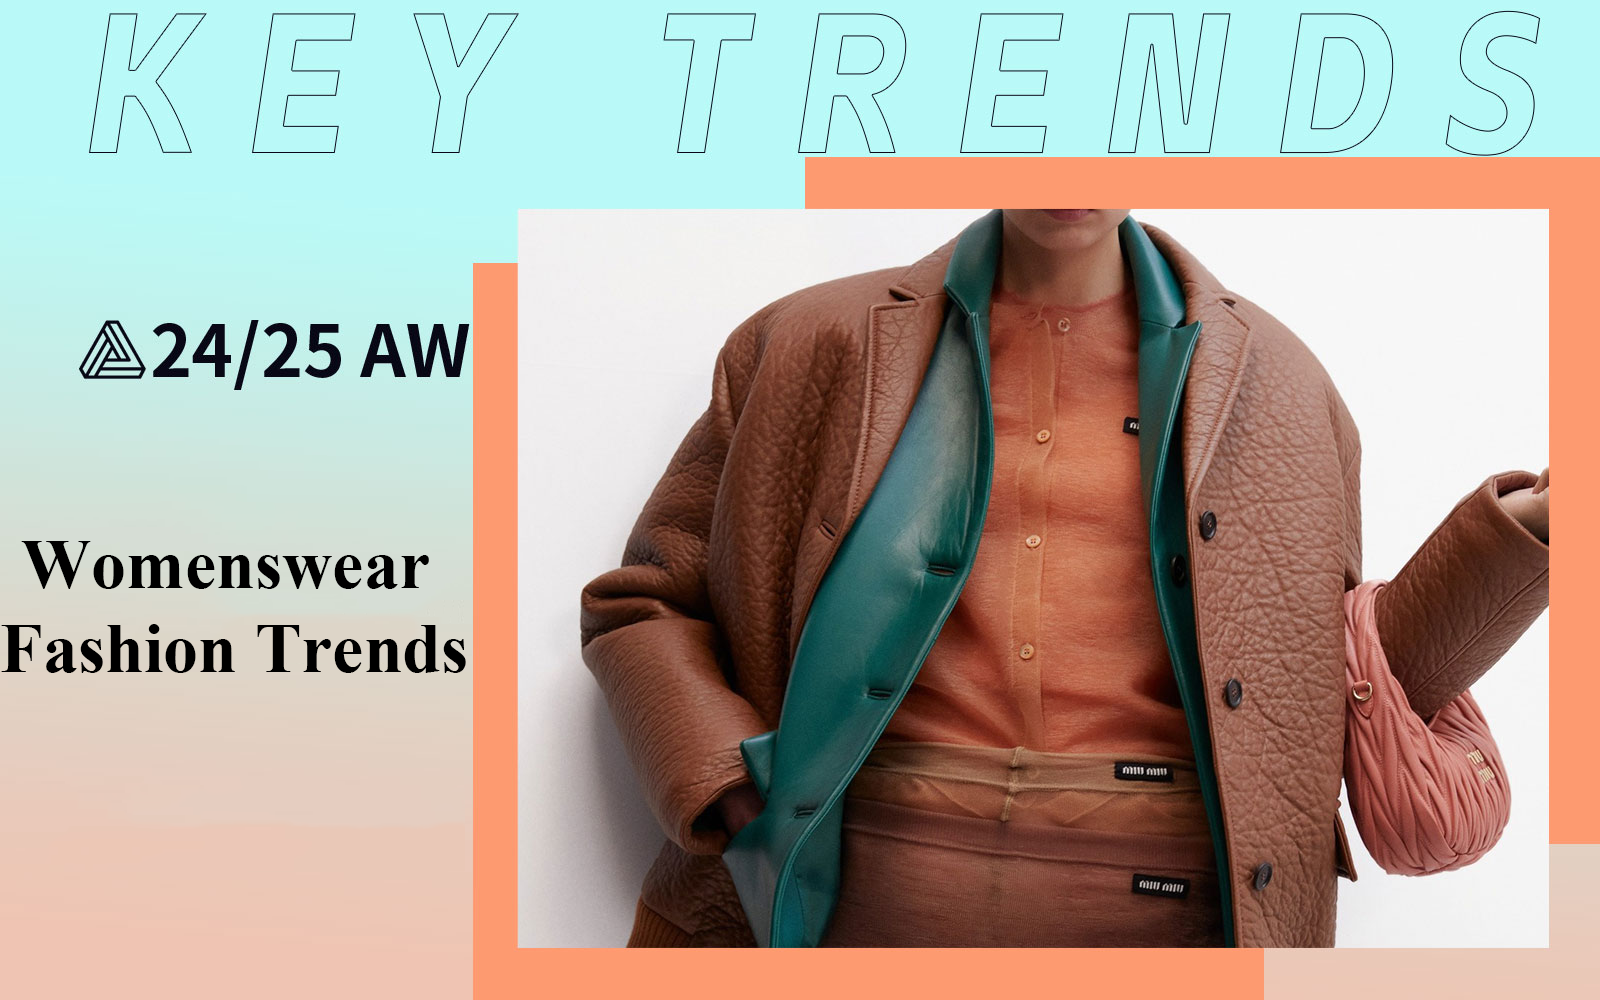 A/W 24/25 Womenswear Fashion Trends